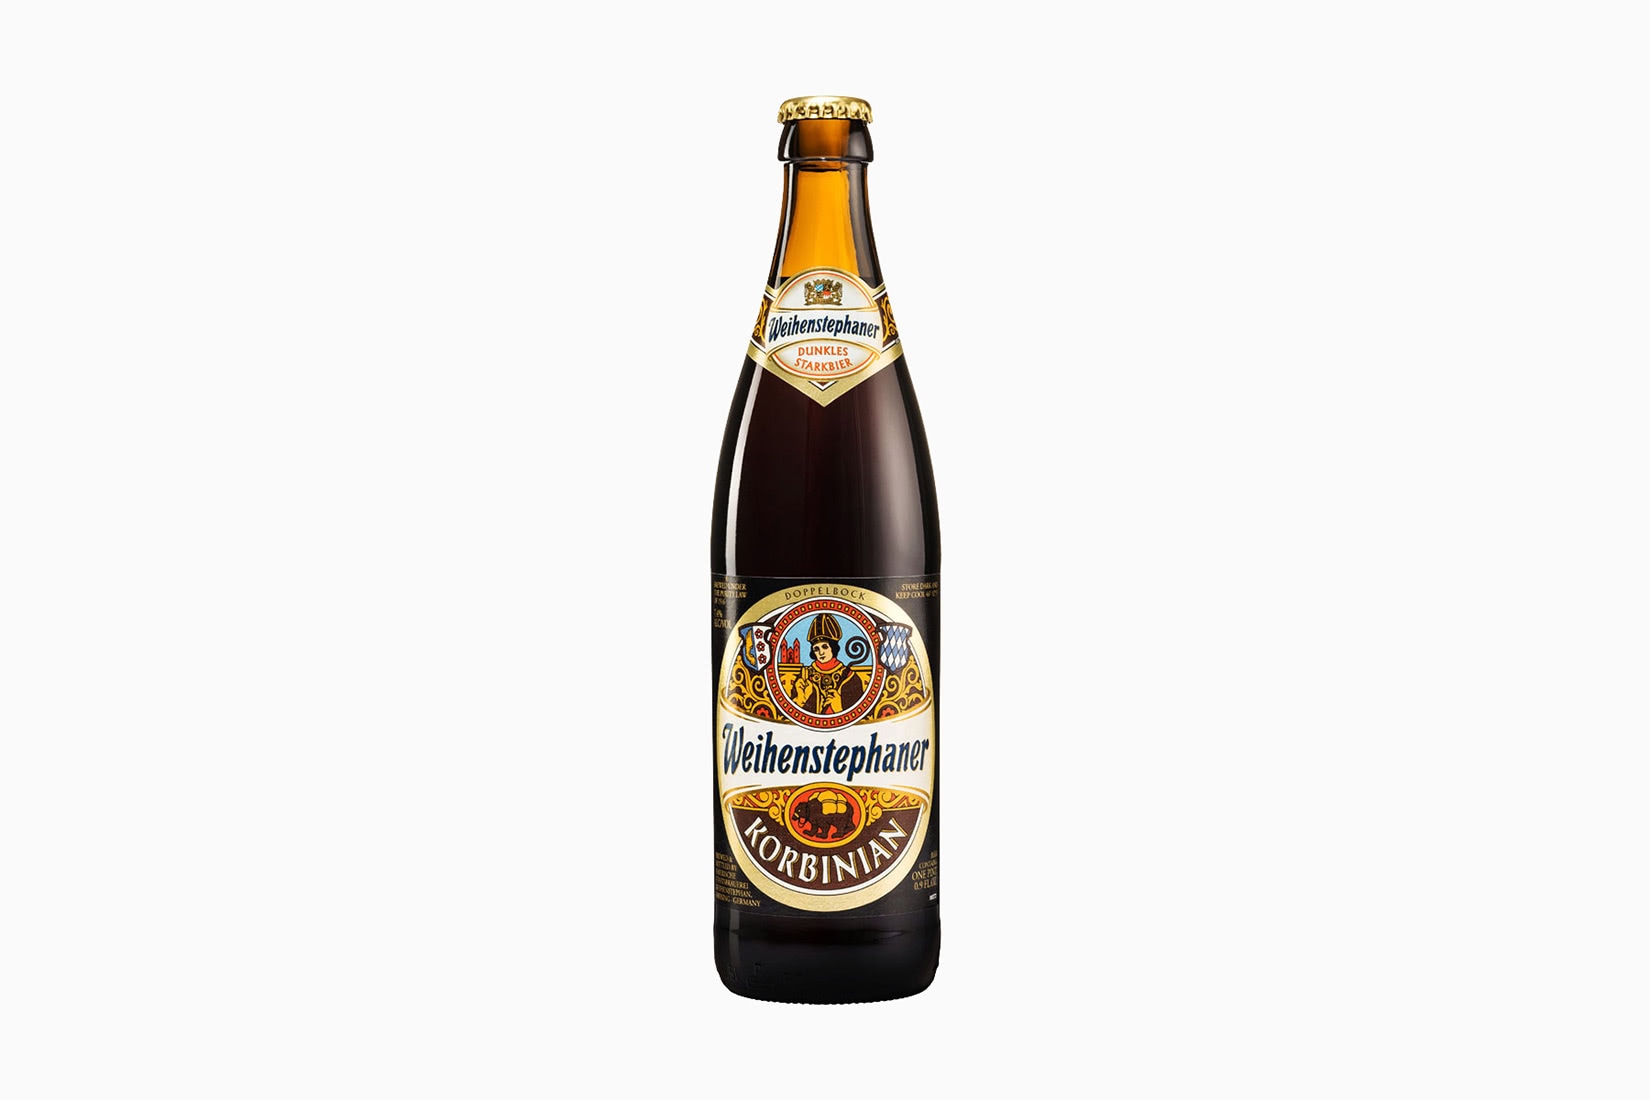 meilleures marques de bière weihenstephaner korbinian- Luxe Digital